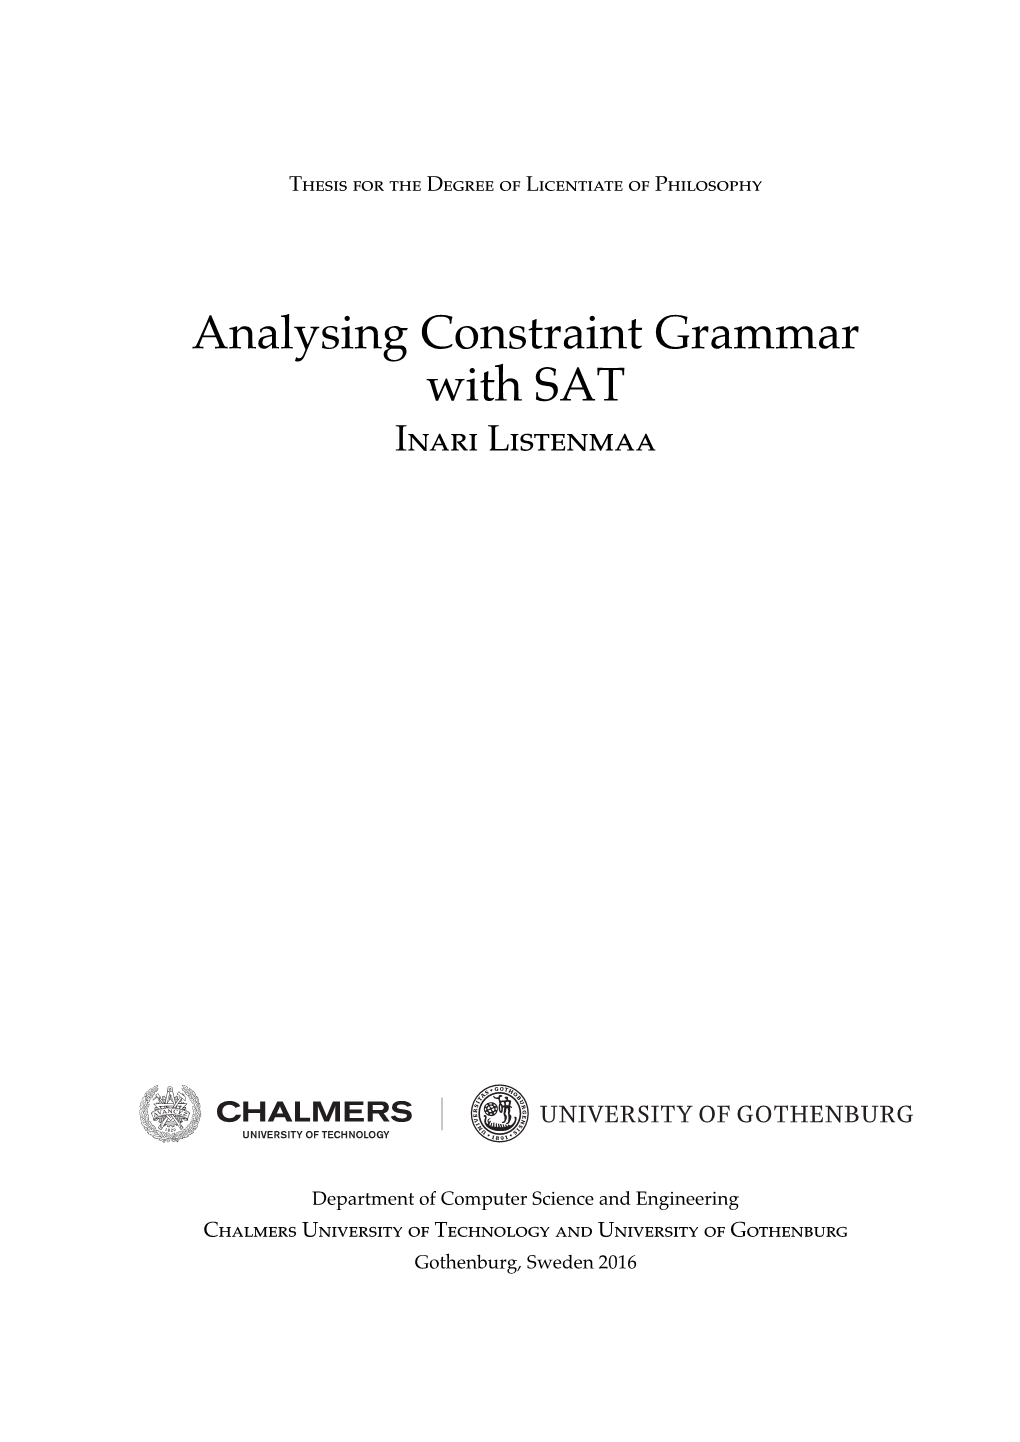 Analysing Constraint Grammar with SAT I L